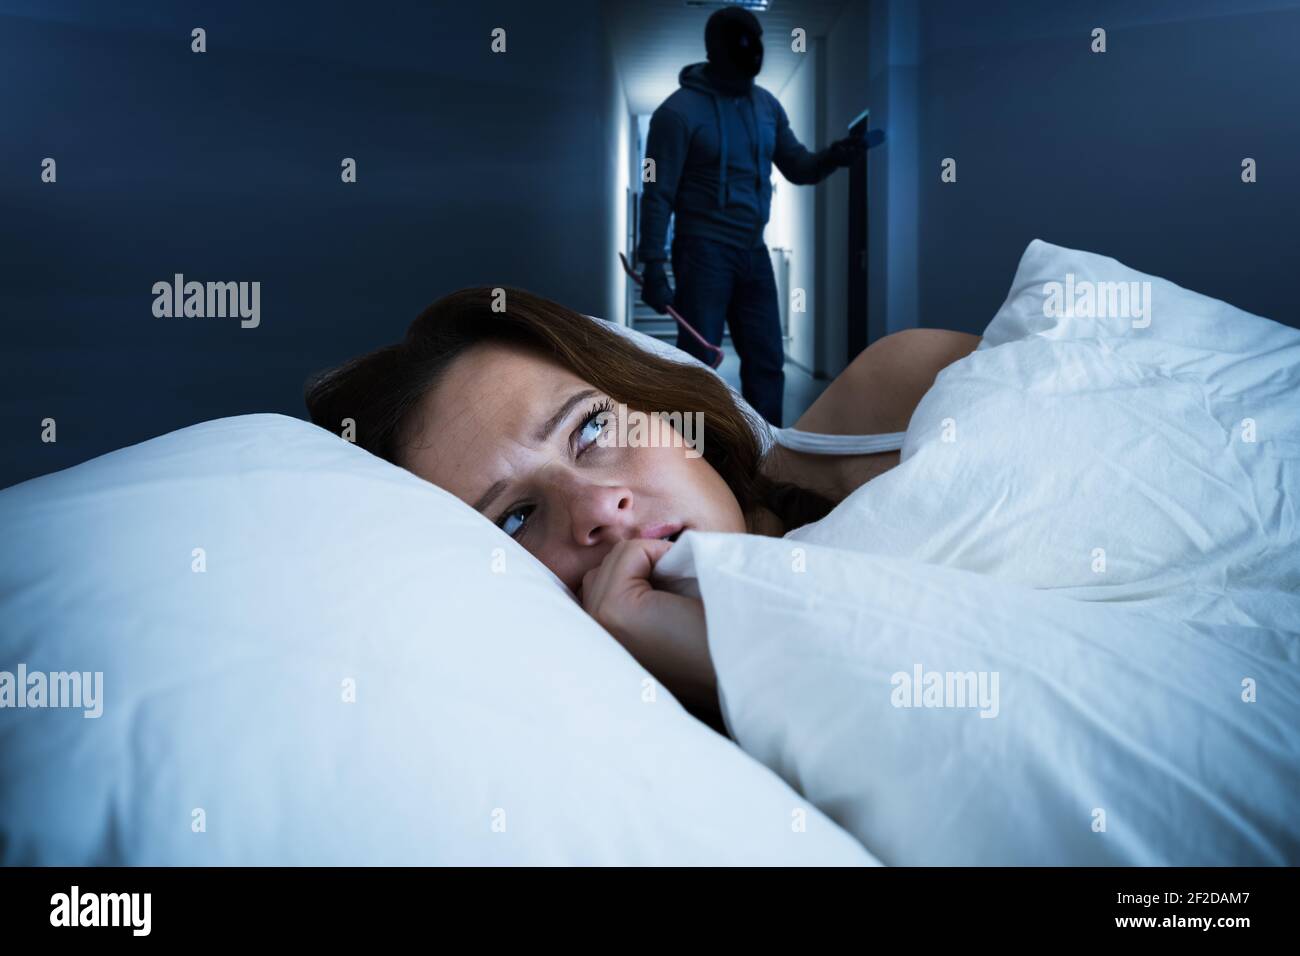 Awake Sleepless Woman Afraid And Scared At Night Stock Photo